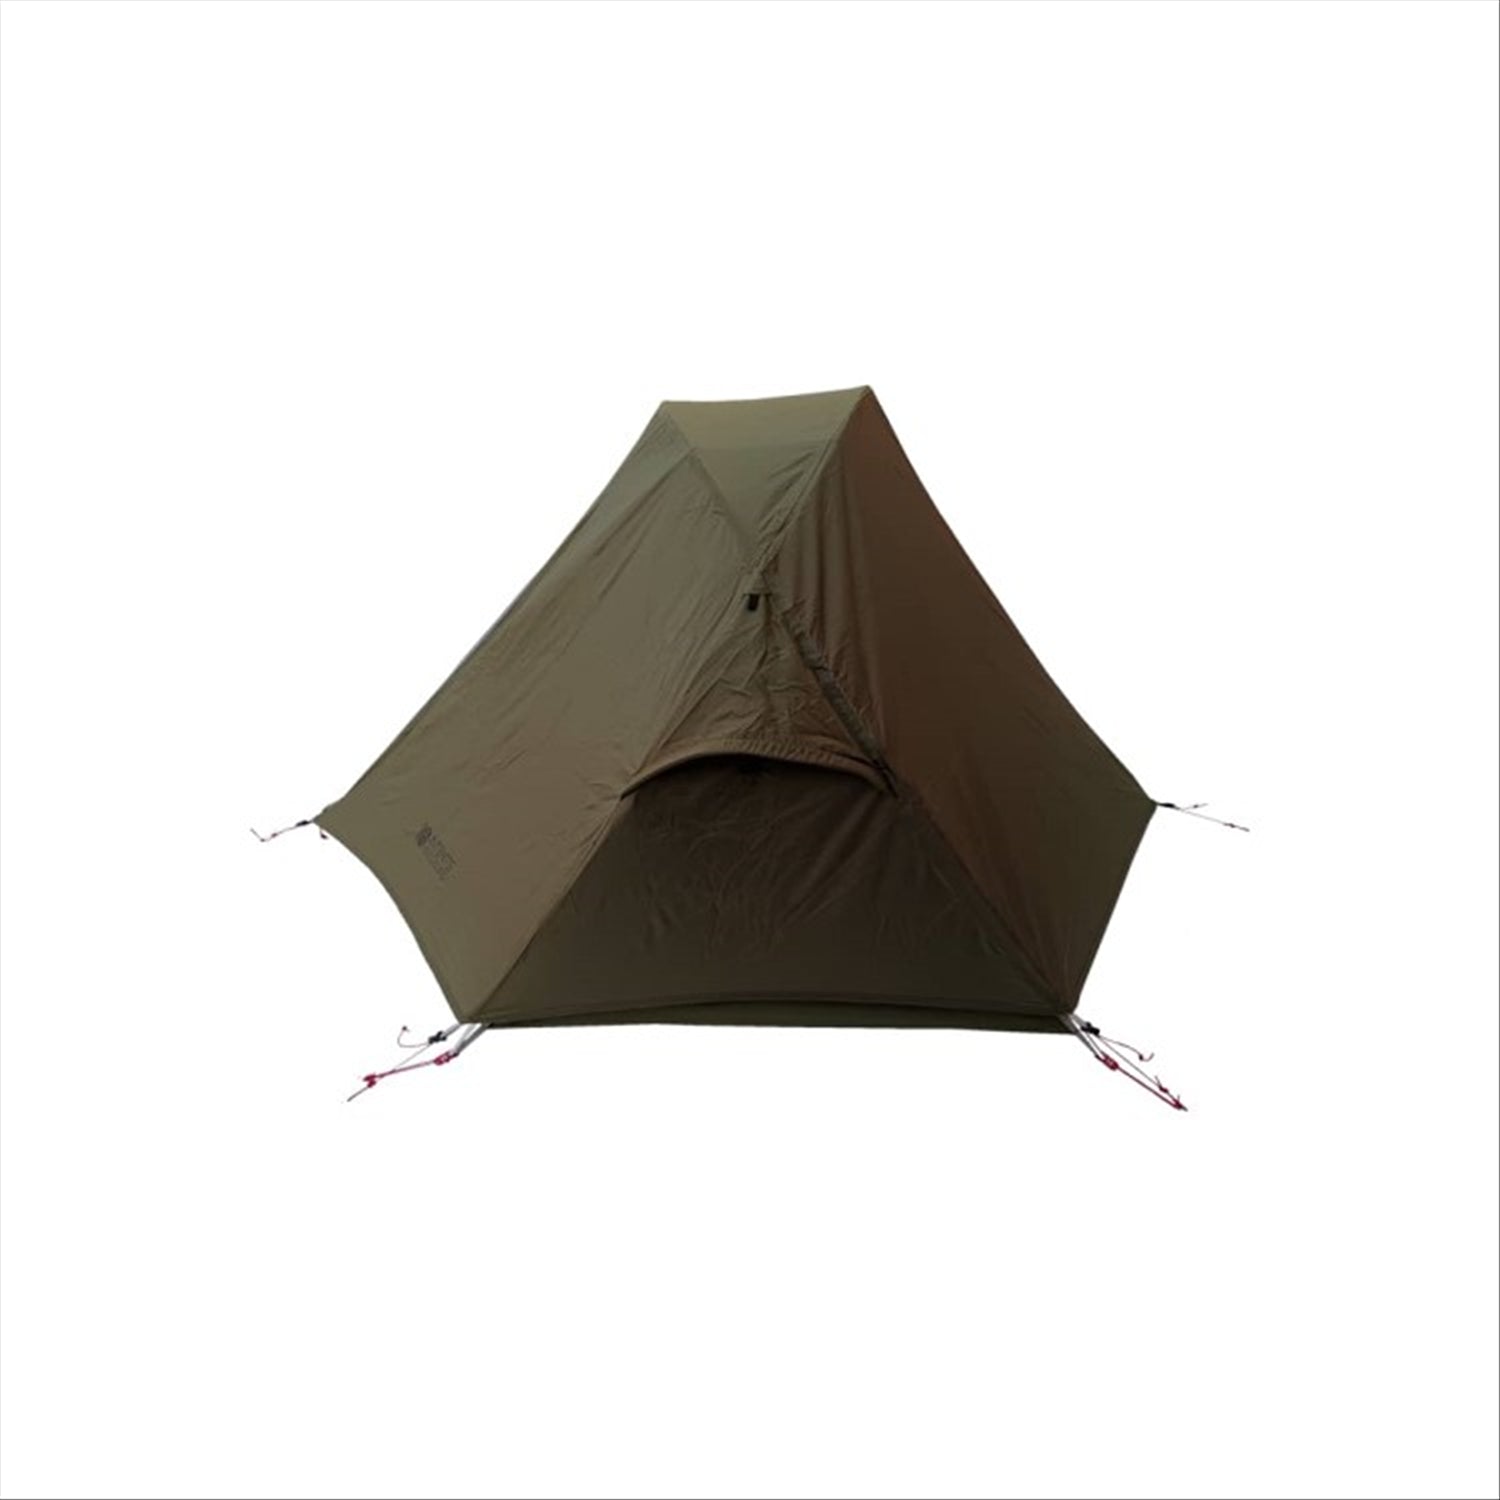 Orson RDR 1 Person Tent - Extra Long, 1.75kg (2022 version)